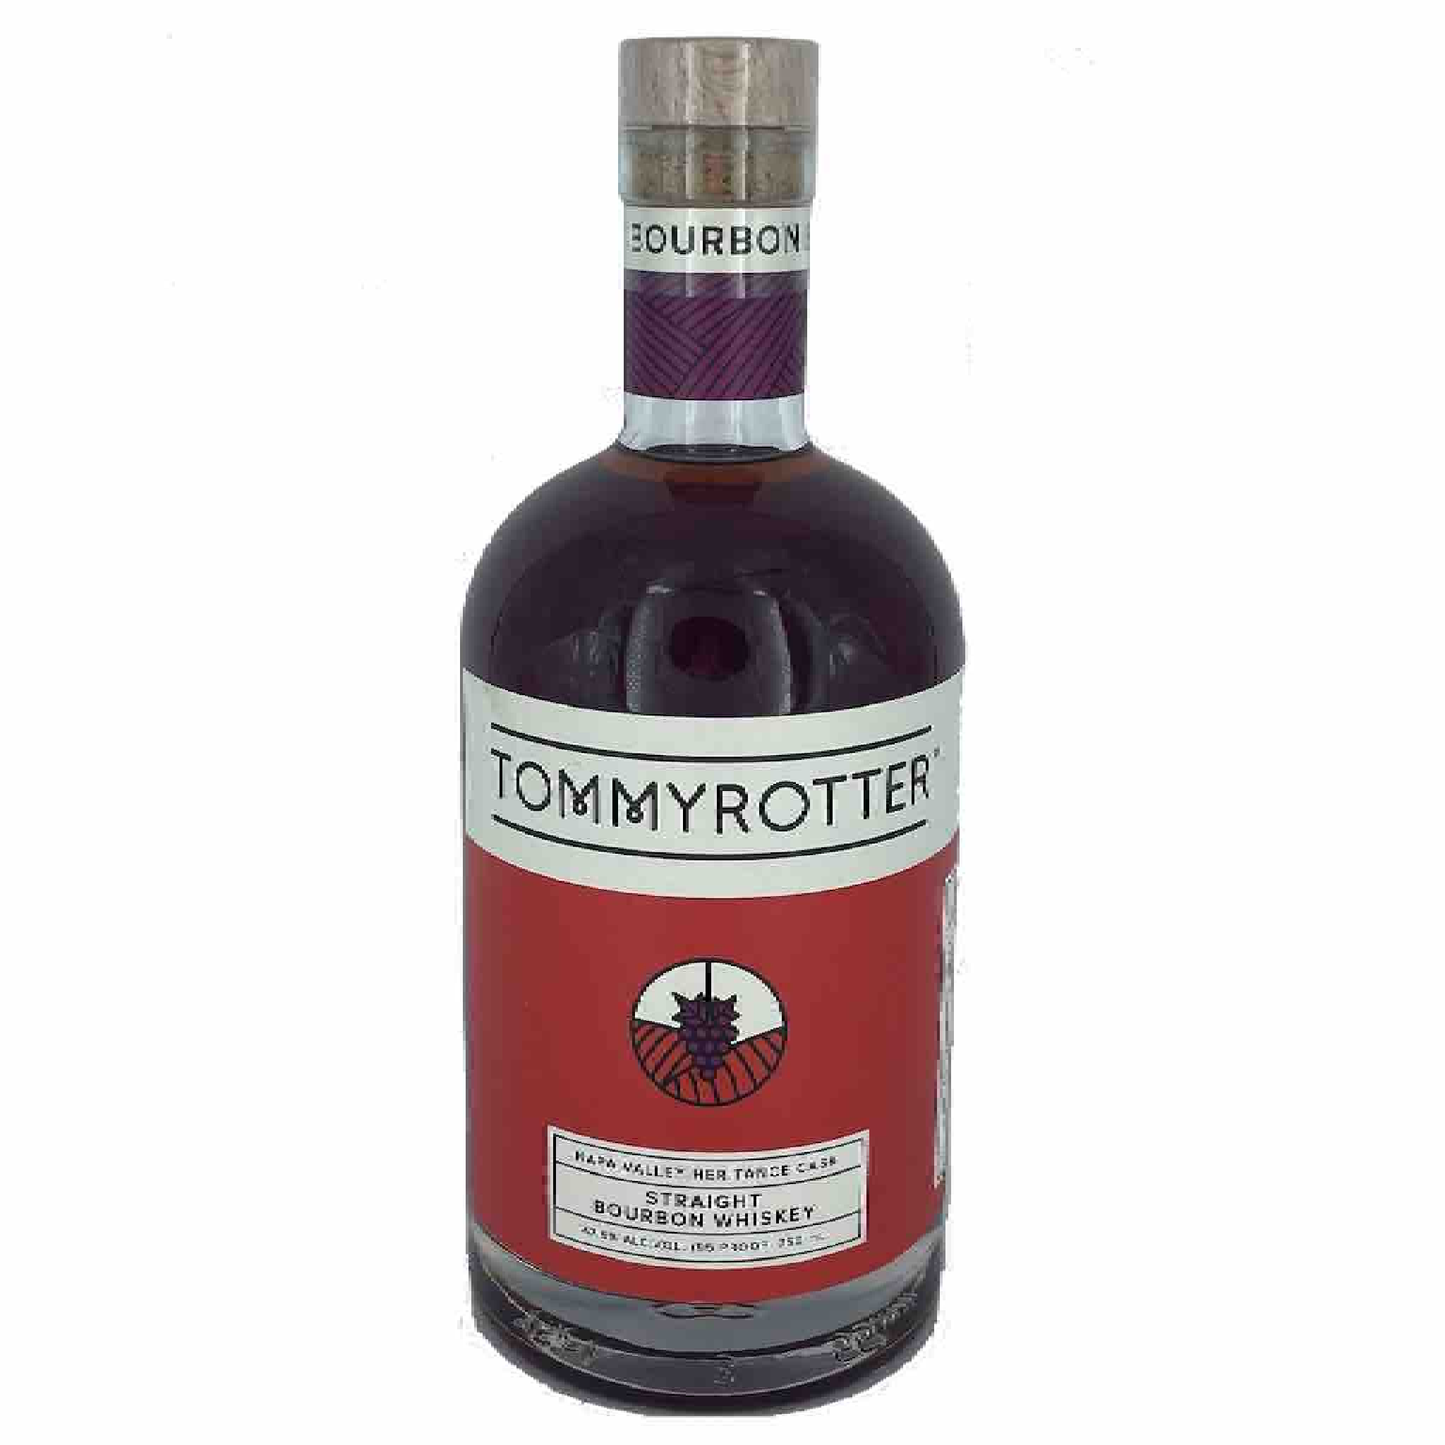 Tommyrotter Bourbon Whiskey - Liquor Geeks